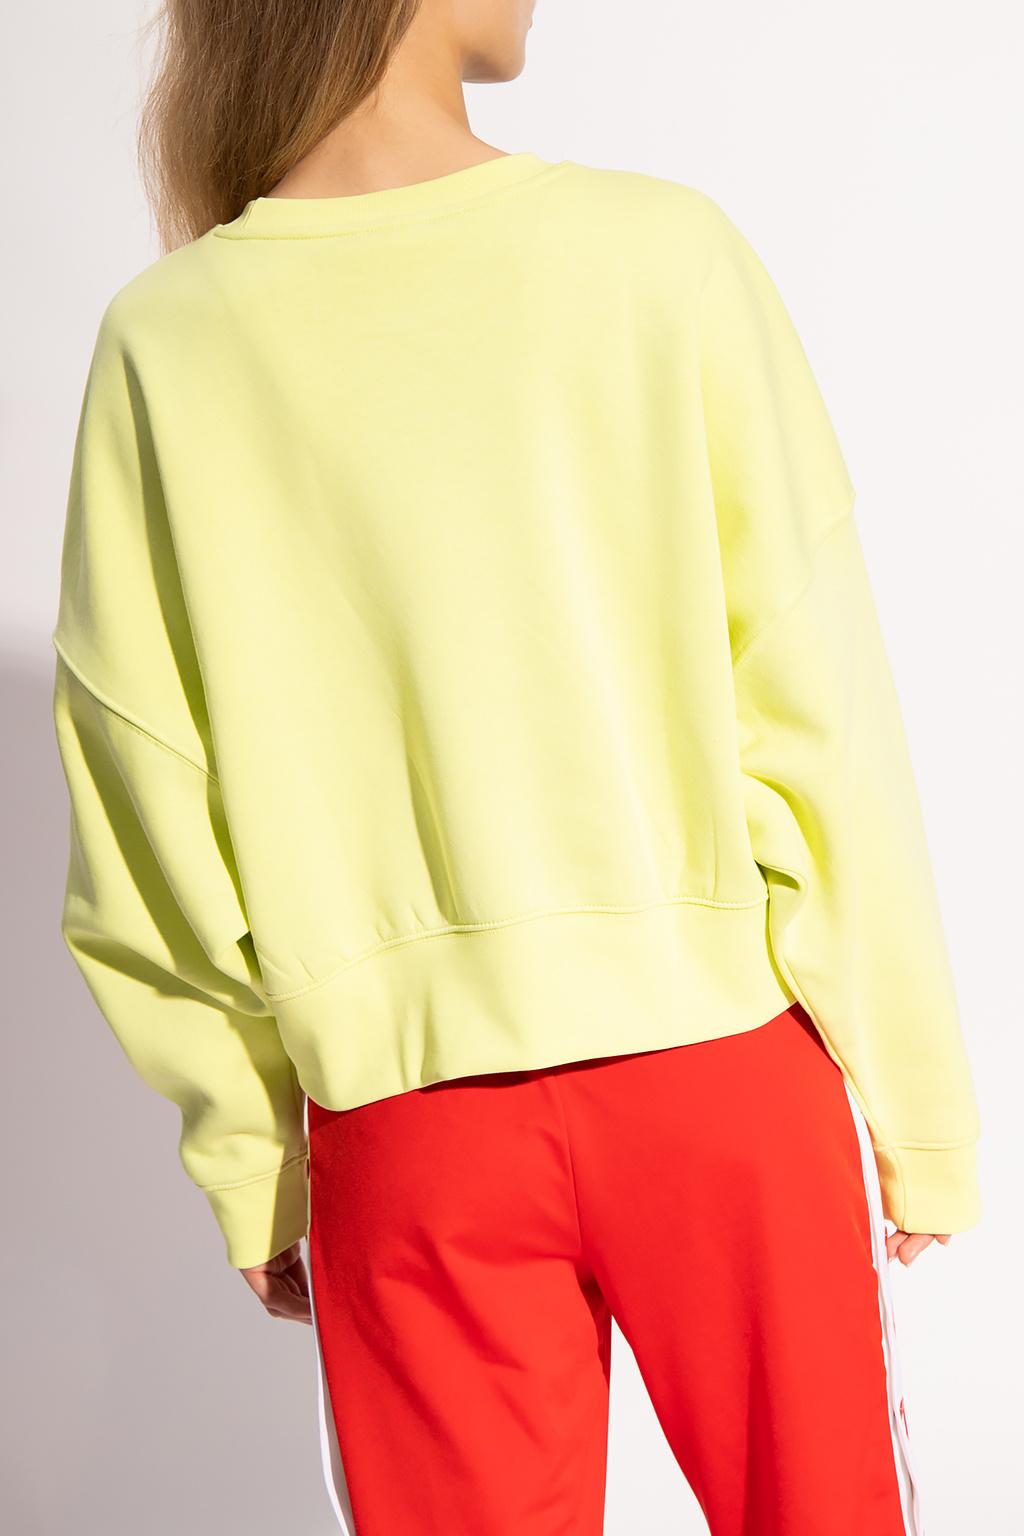 adidas Originals Sweatshirt With Logo in Yellow | Lyst